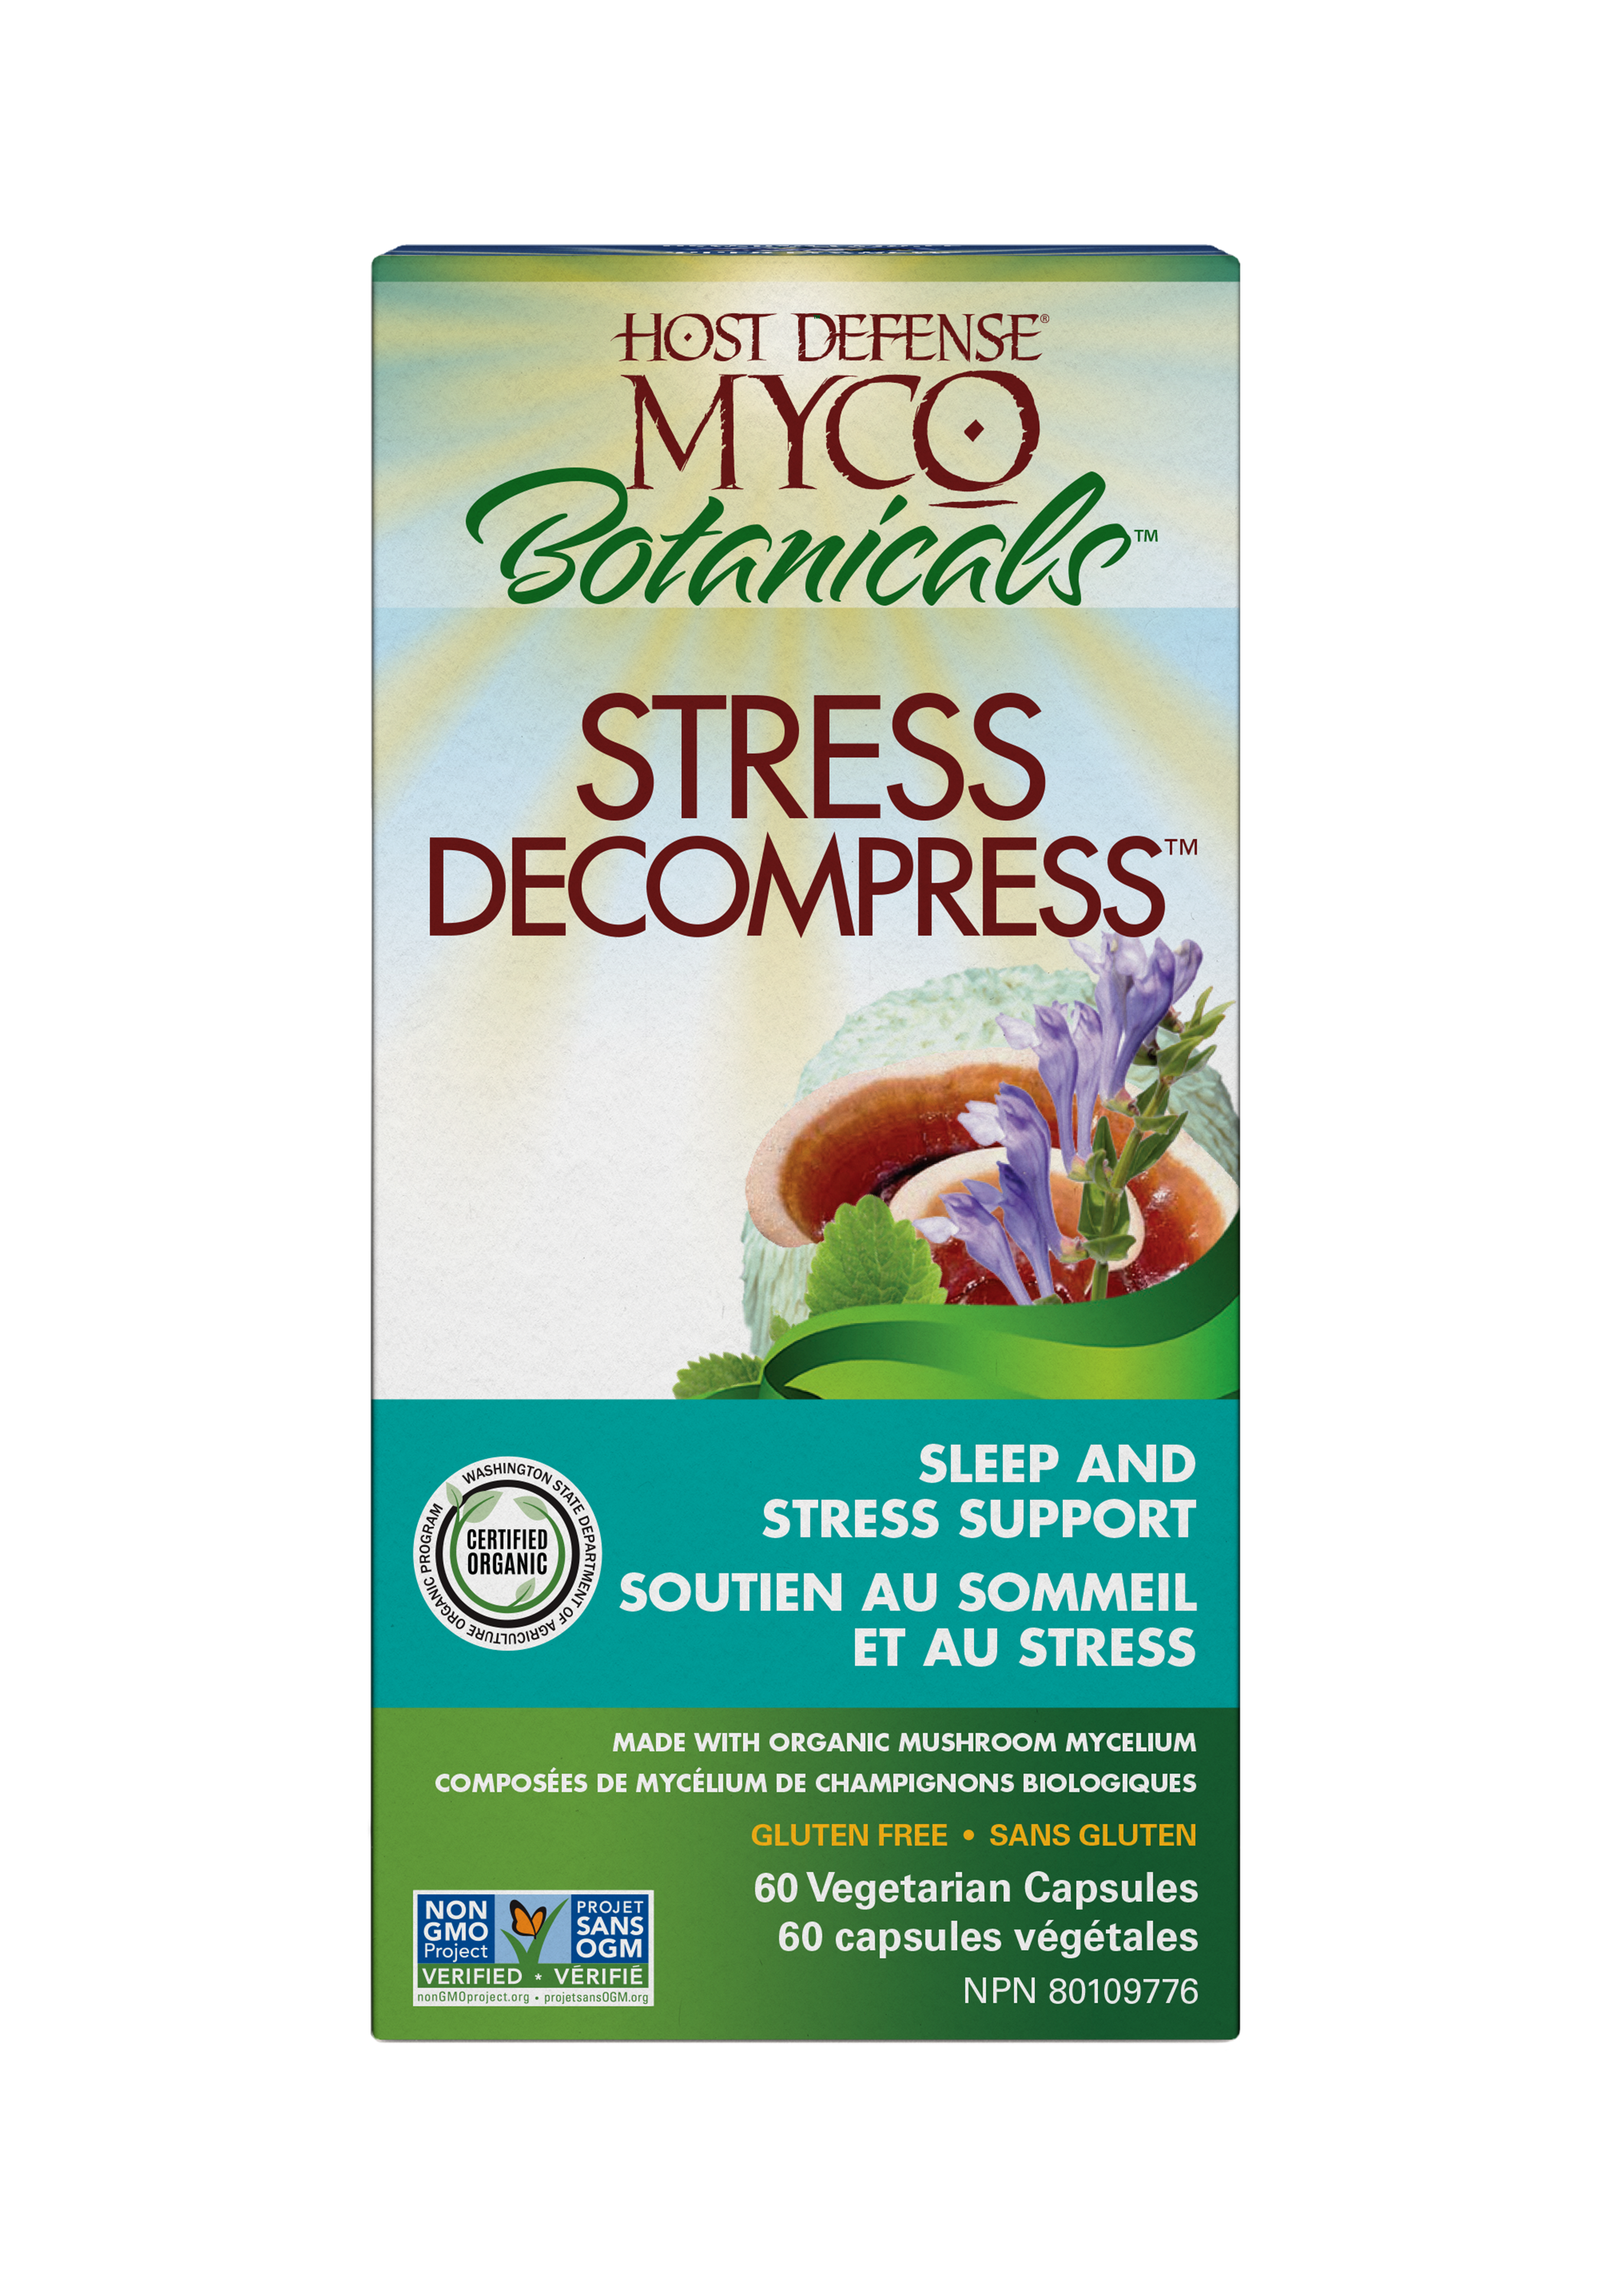 Host Defense Mycobotanicals Stress Decompress 60 Capsules